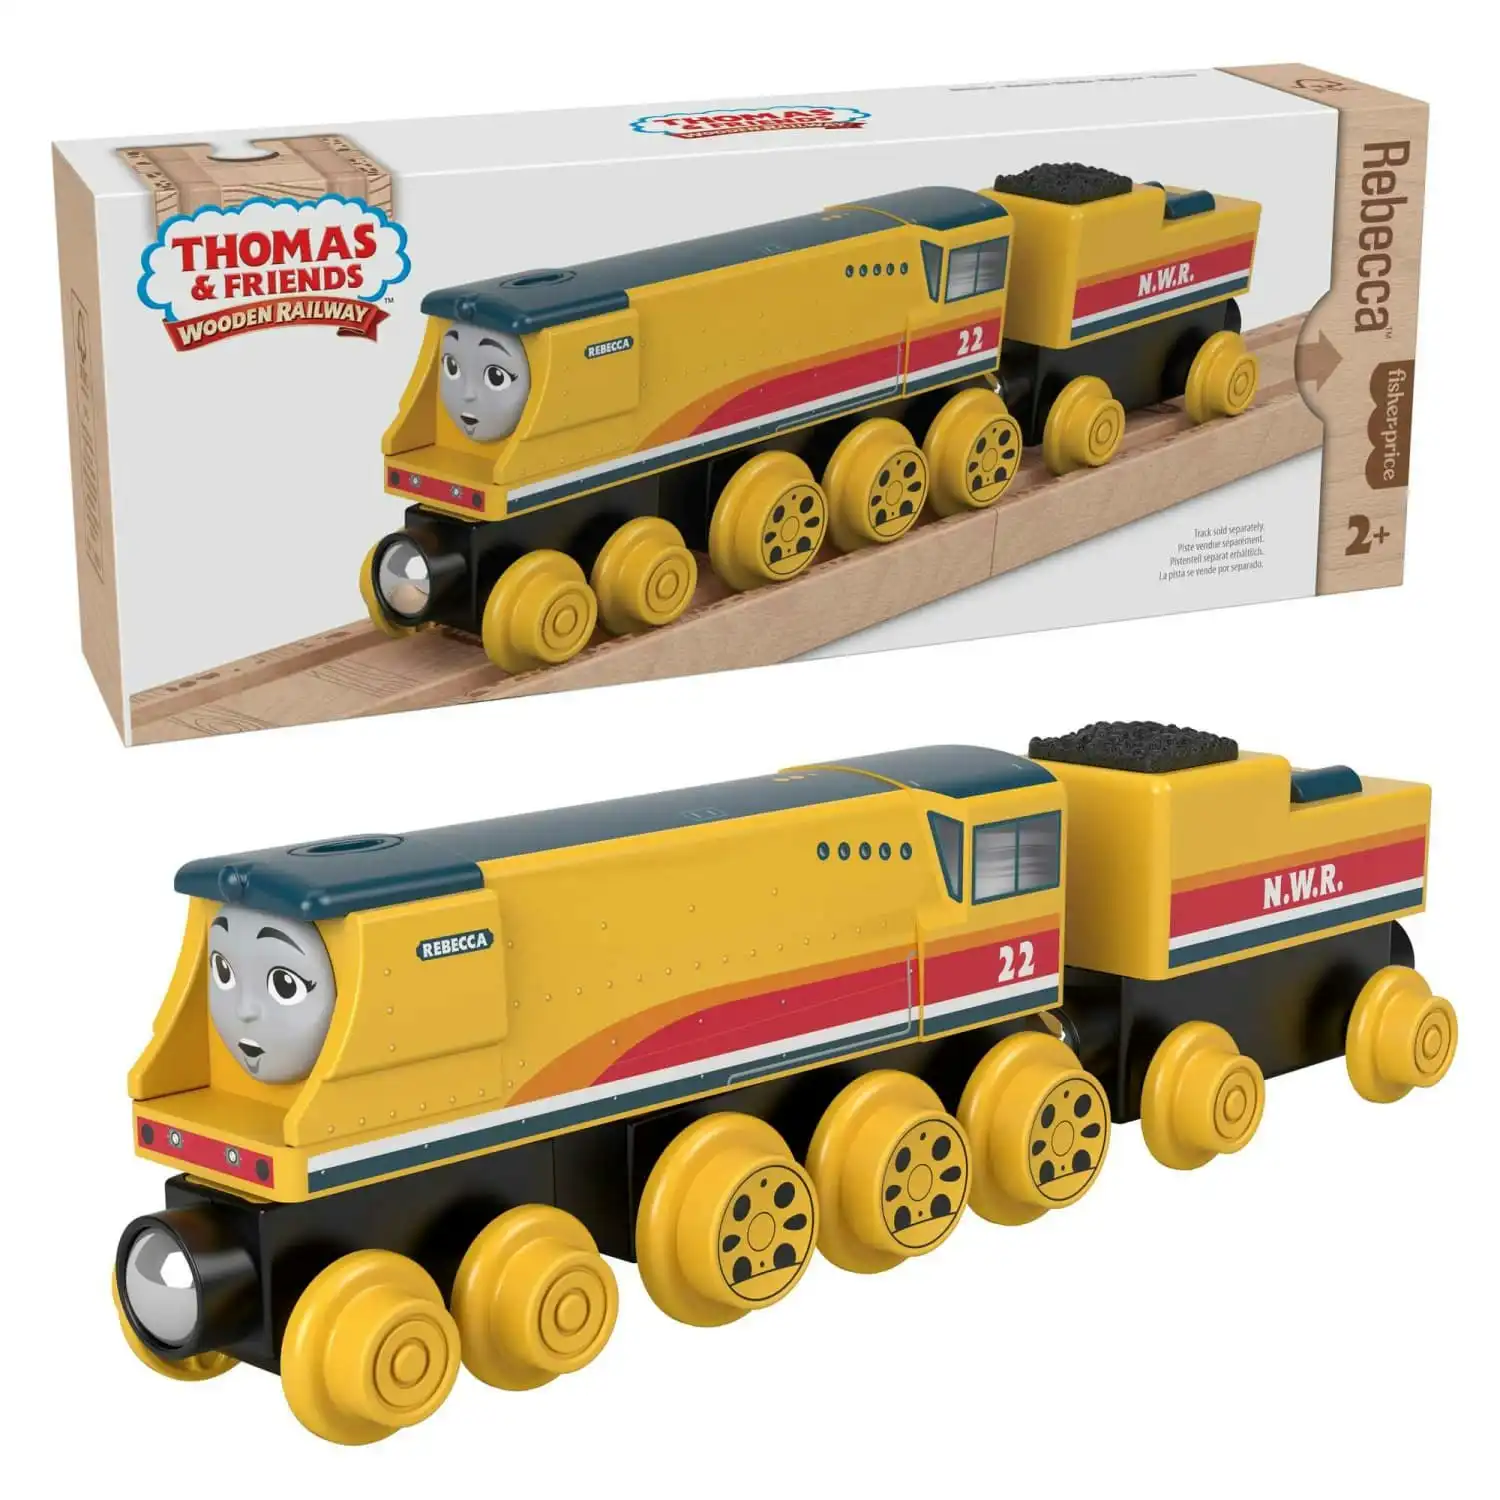 Thomas & Friends Wooden Railway Rebecca Train Engine And Coal Car